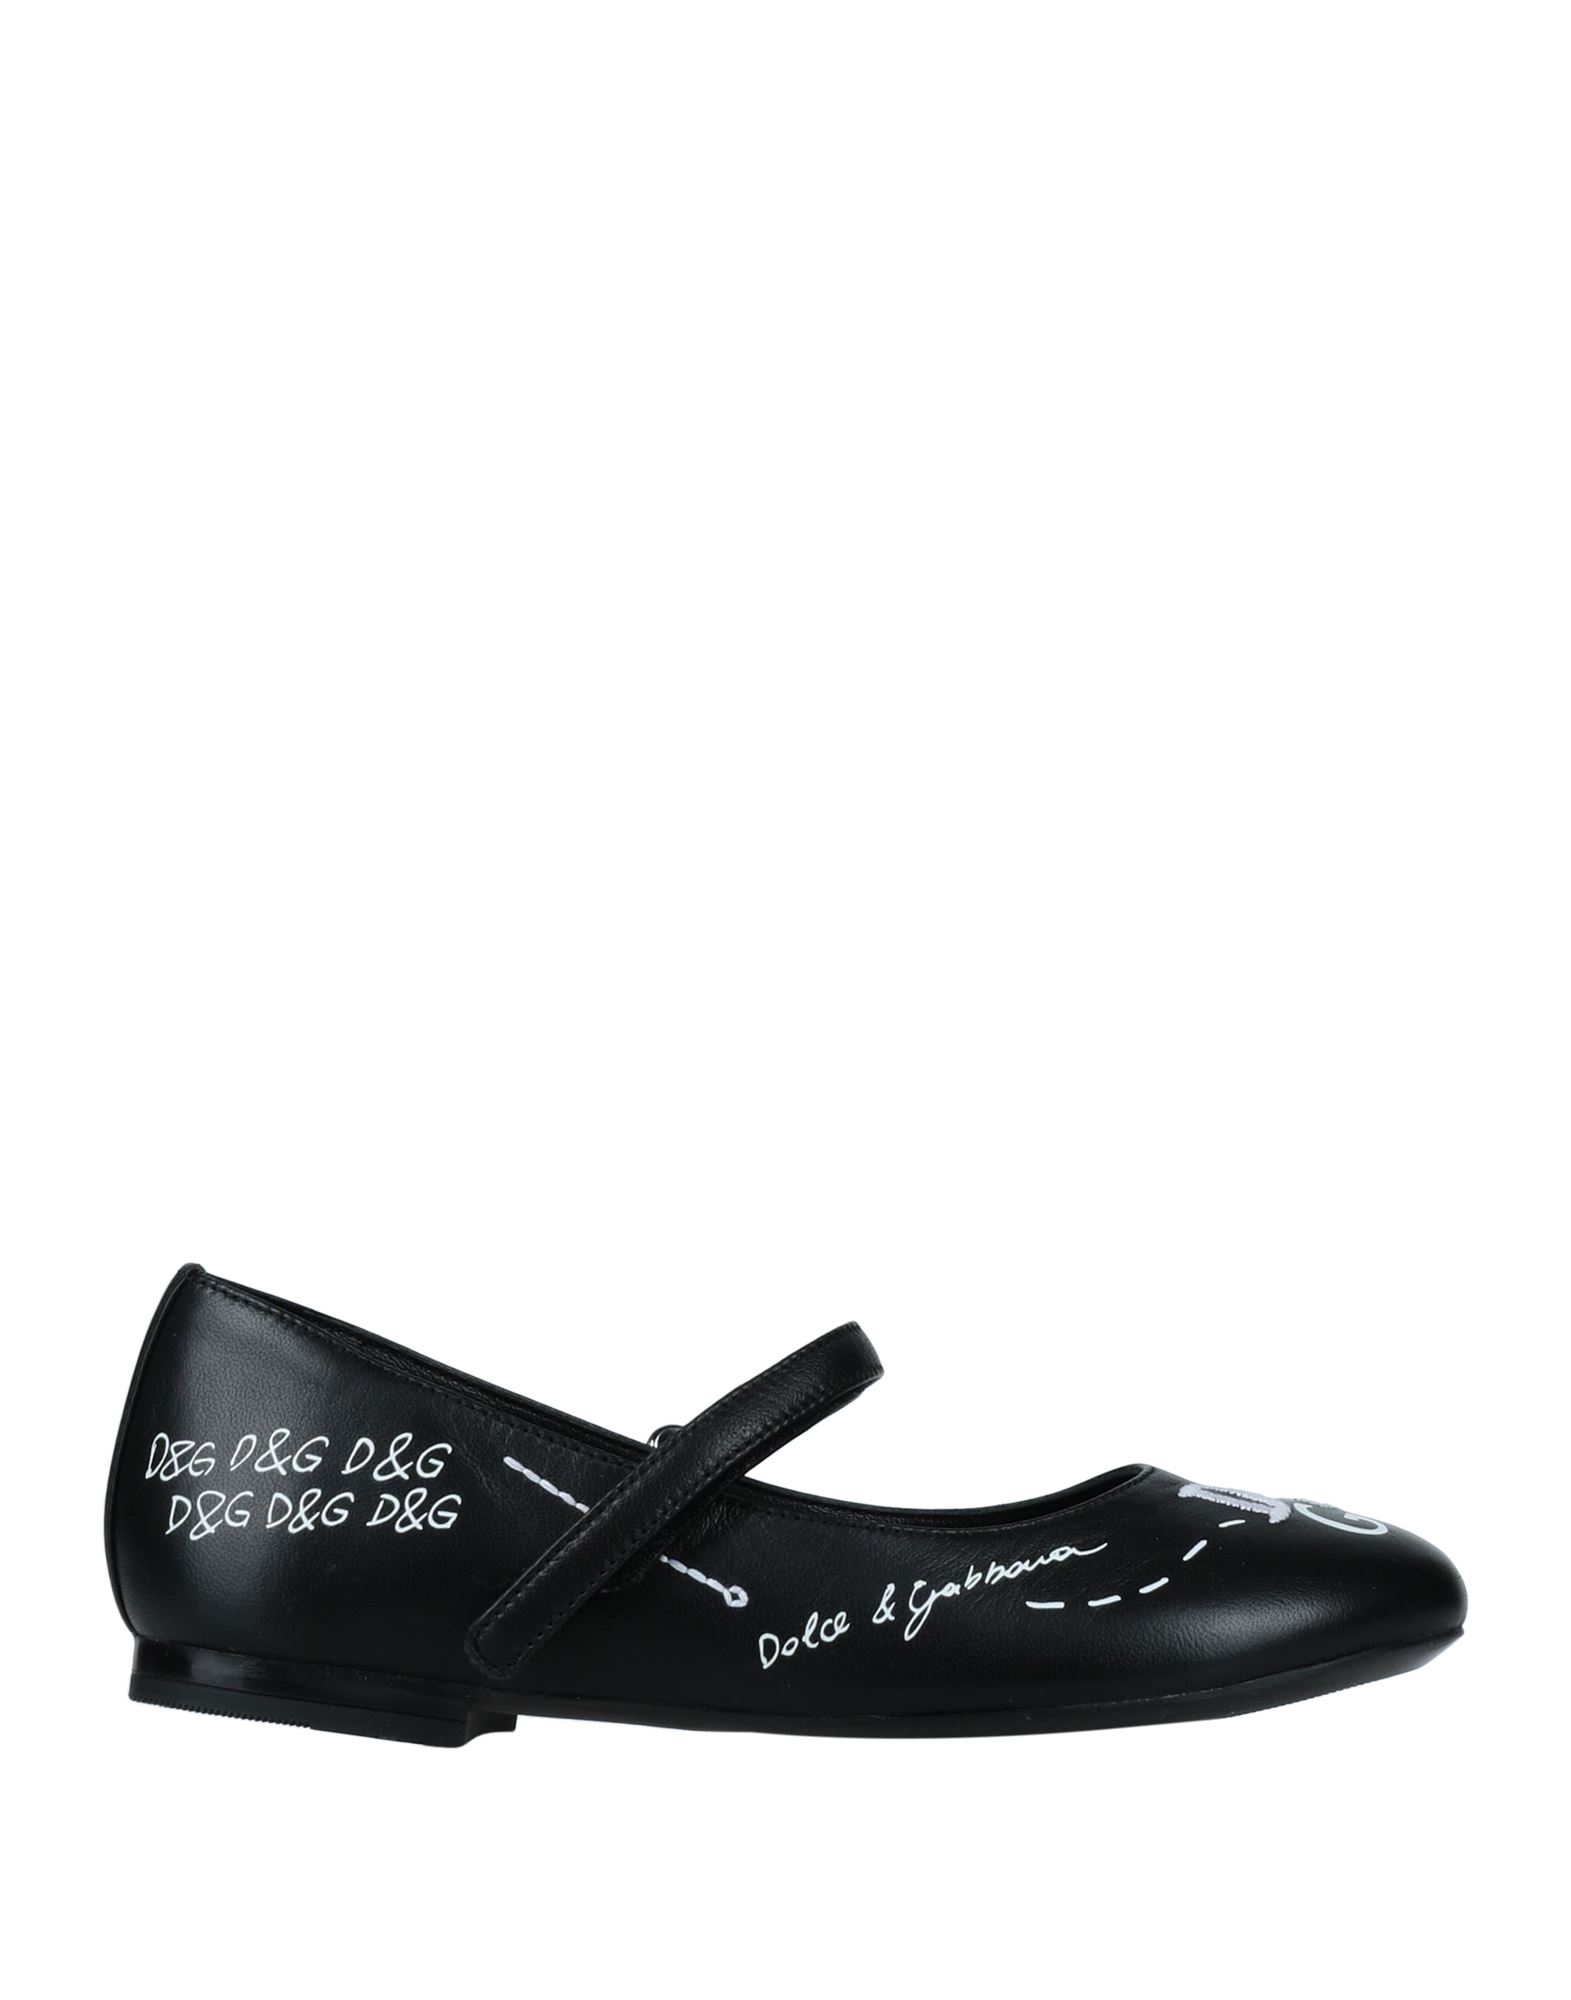 Dolce & Gabbana Kids'  Toddler Girl Ballet Flats Black Size 9.5c Soft Leather